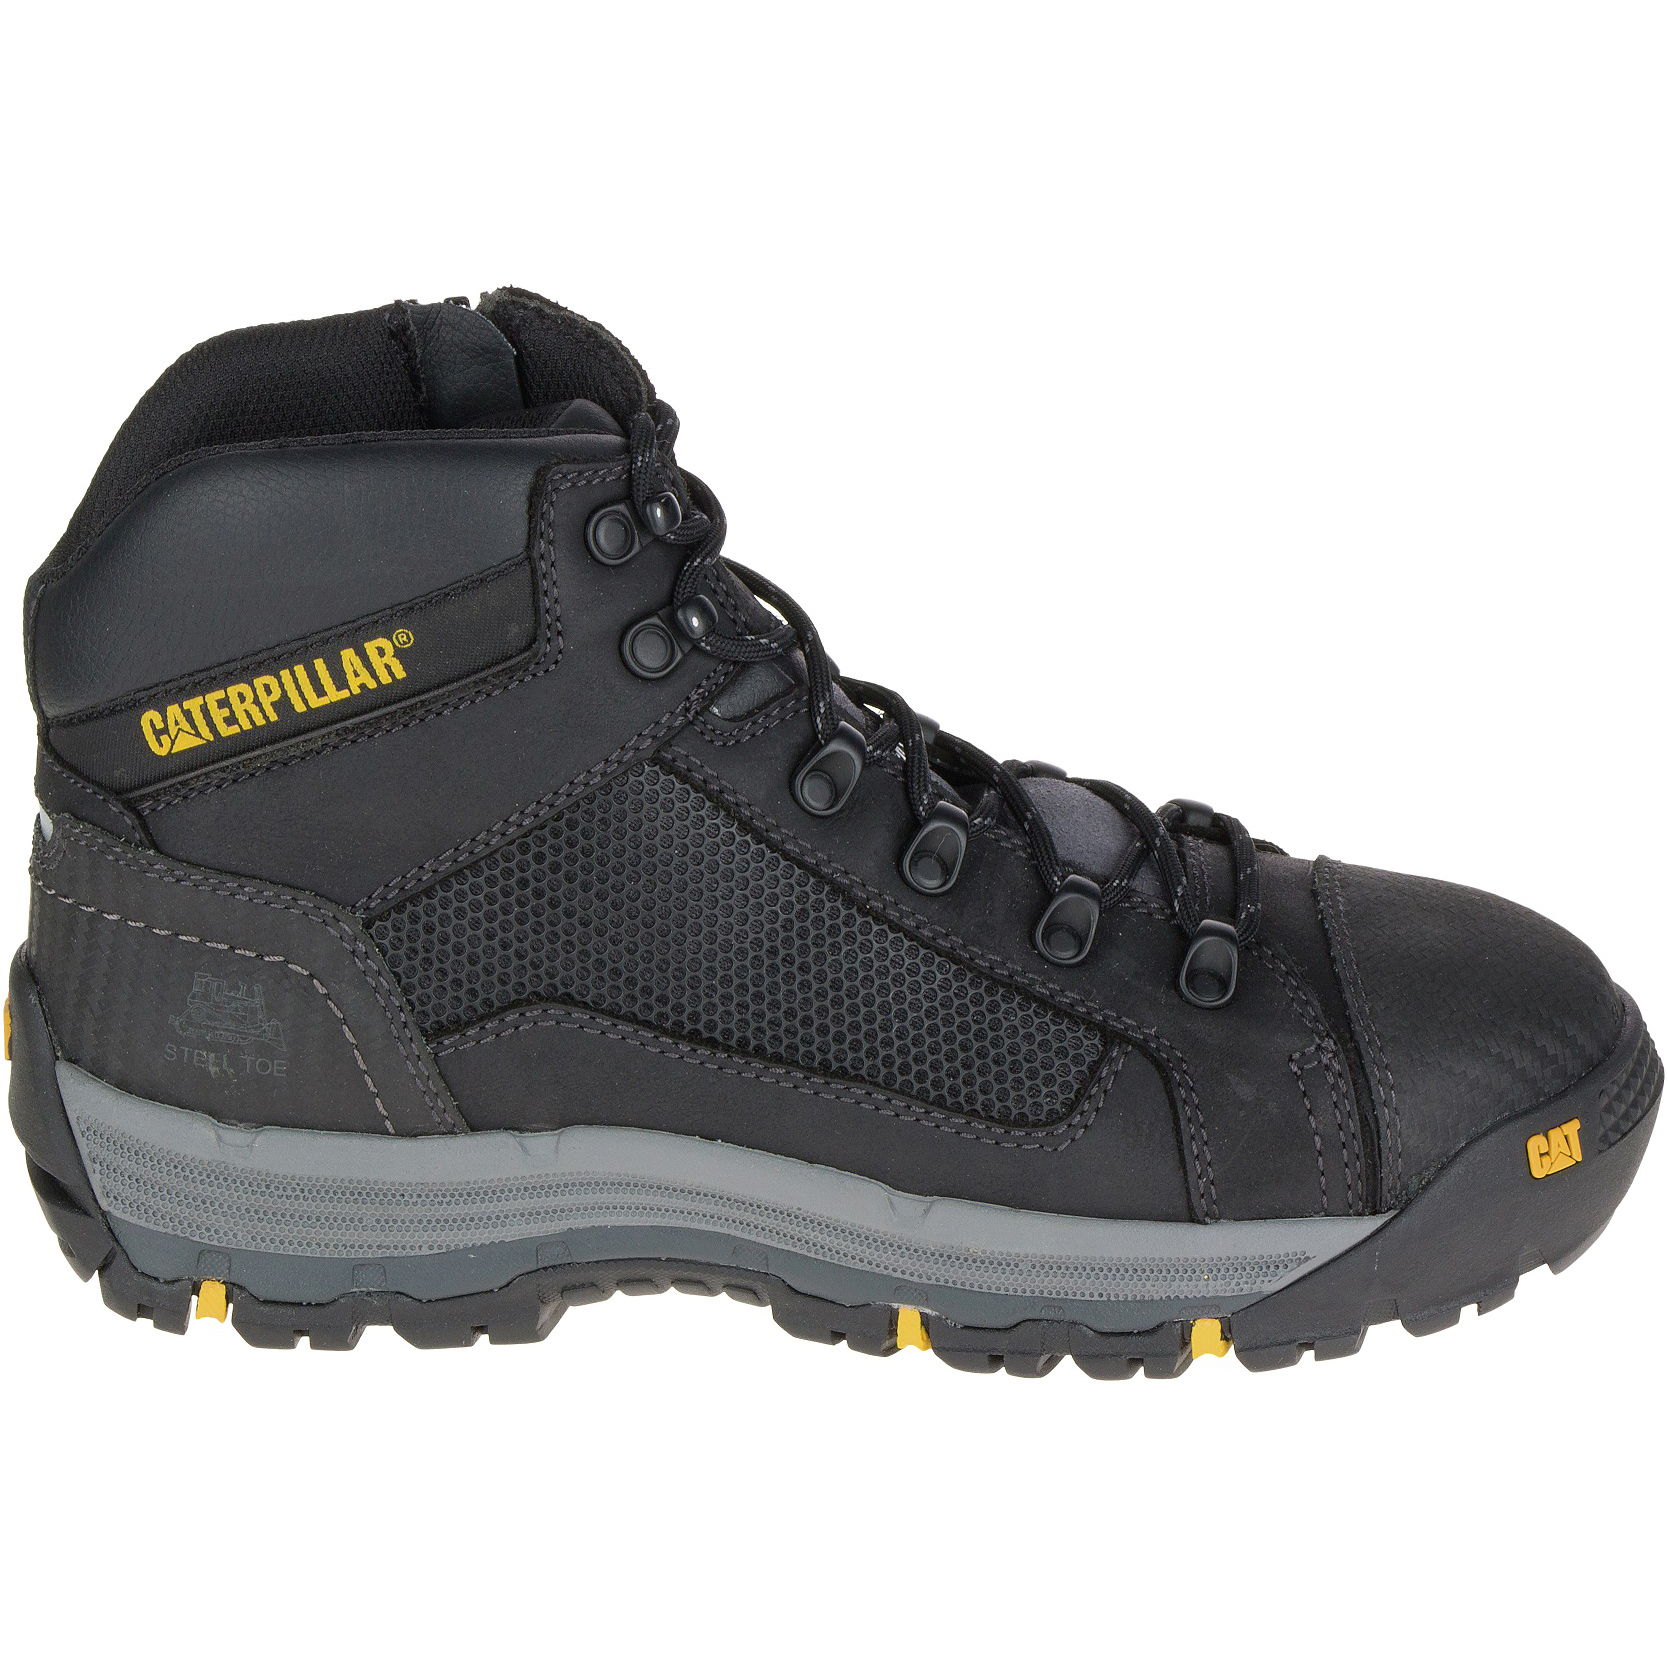 Black Caterpillar Convex St Mid Men's Work Boots | Cat-603825